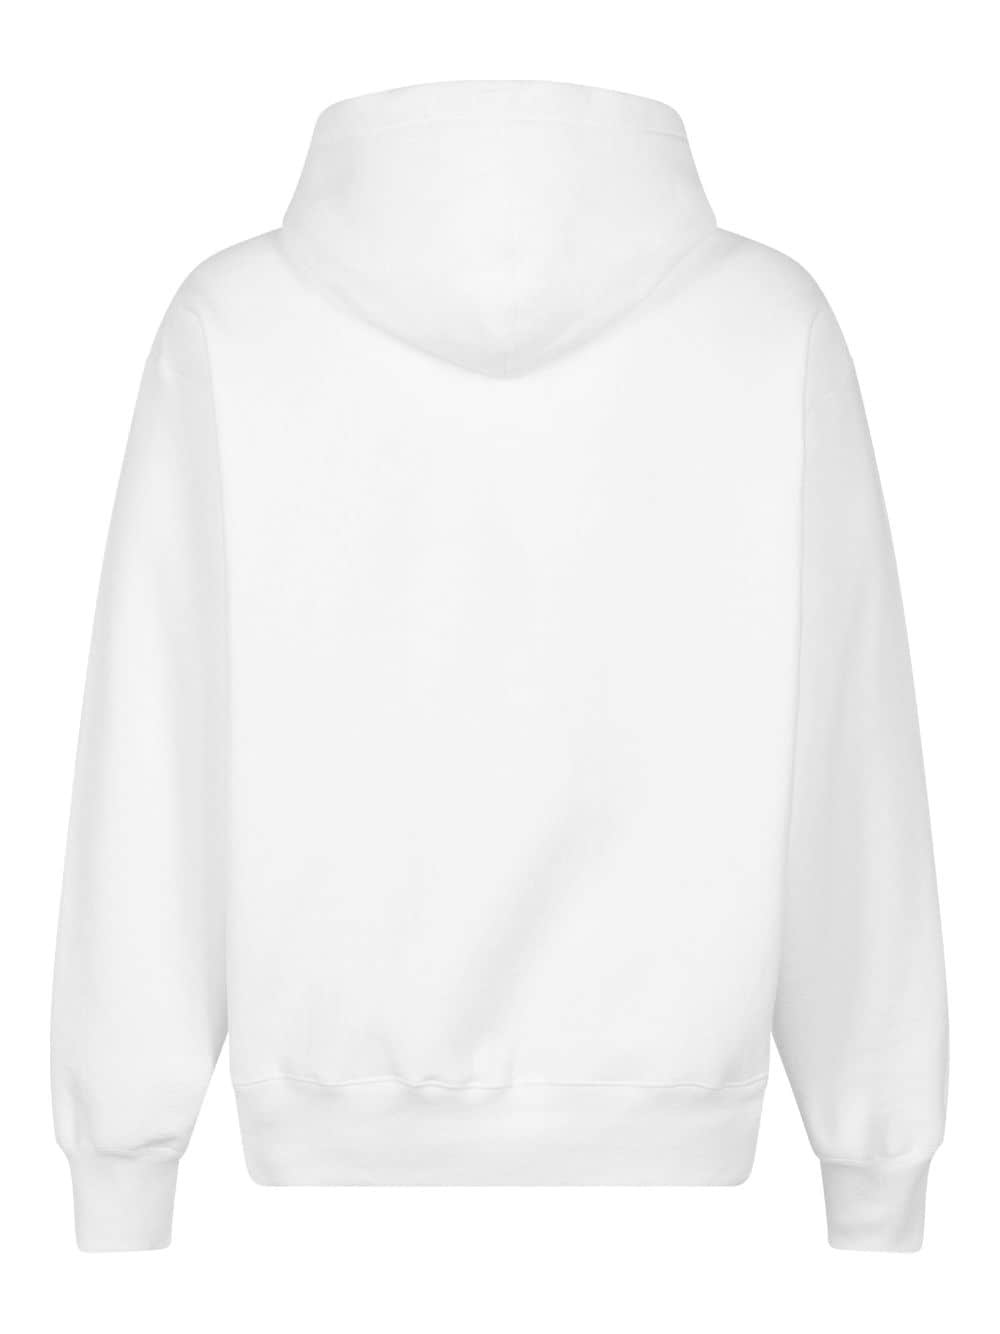 Box Logo "FW 23 - White" hoodie - 2